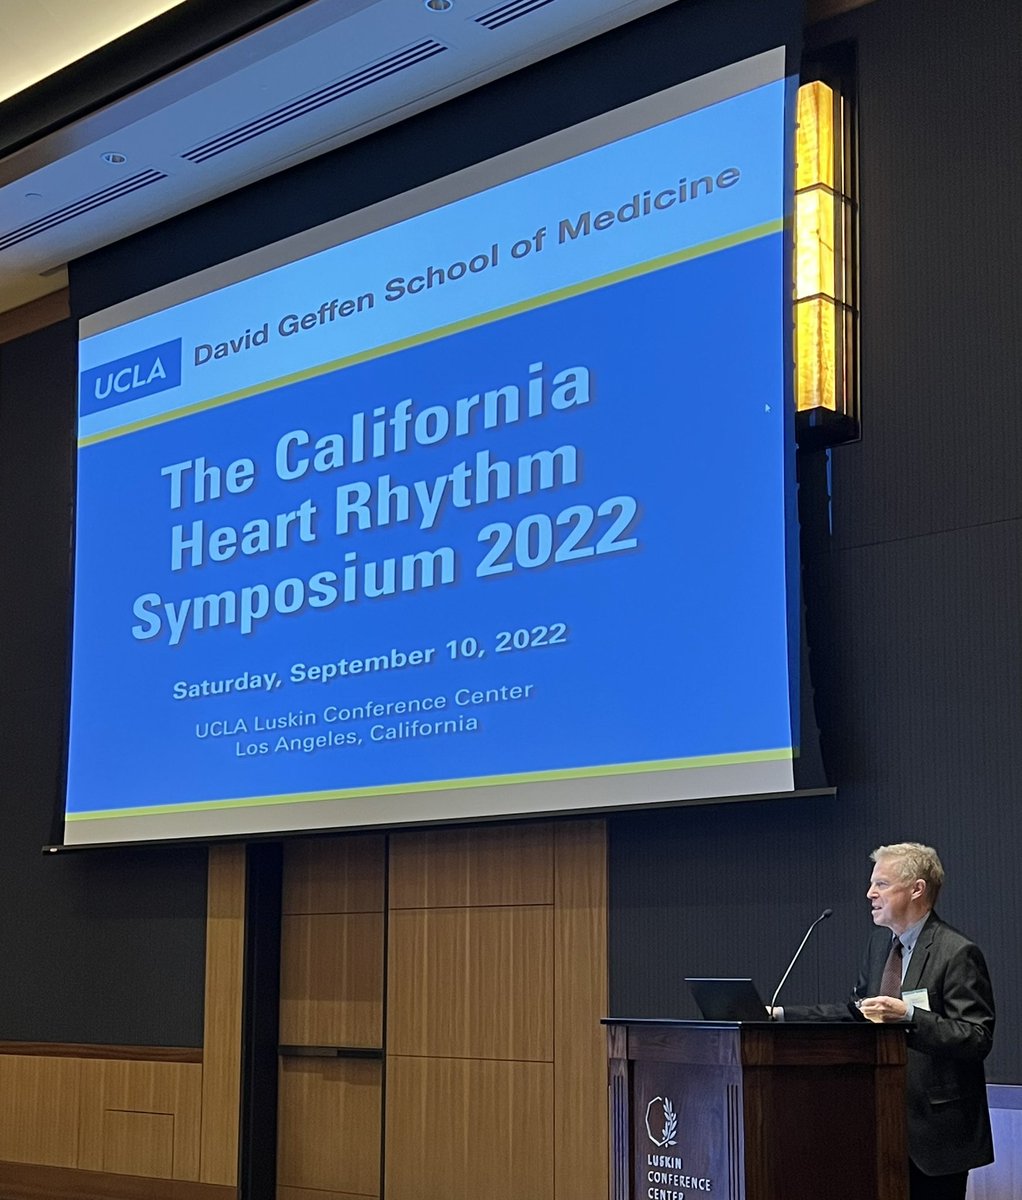 UCLA 2022 California Heart Rhythm Symposium @uclameded @jgharoldmd @shivkumarmd @HRSonline @ACCinTouch @CMAlbertEP @CedarsSinaiMed @CaliforniaACC Discover the latest advances in the understanding of cardiac arrhythmias - recognize how these treatment advances can be applied…